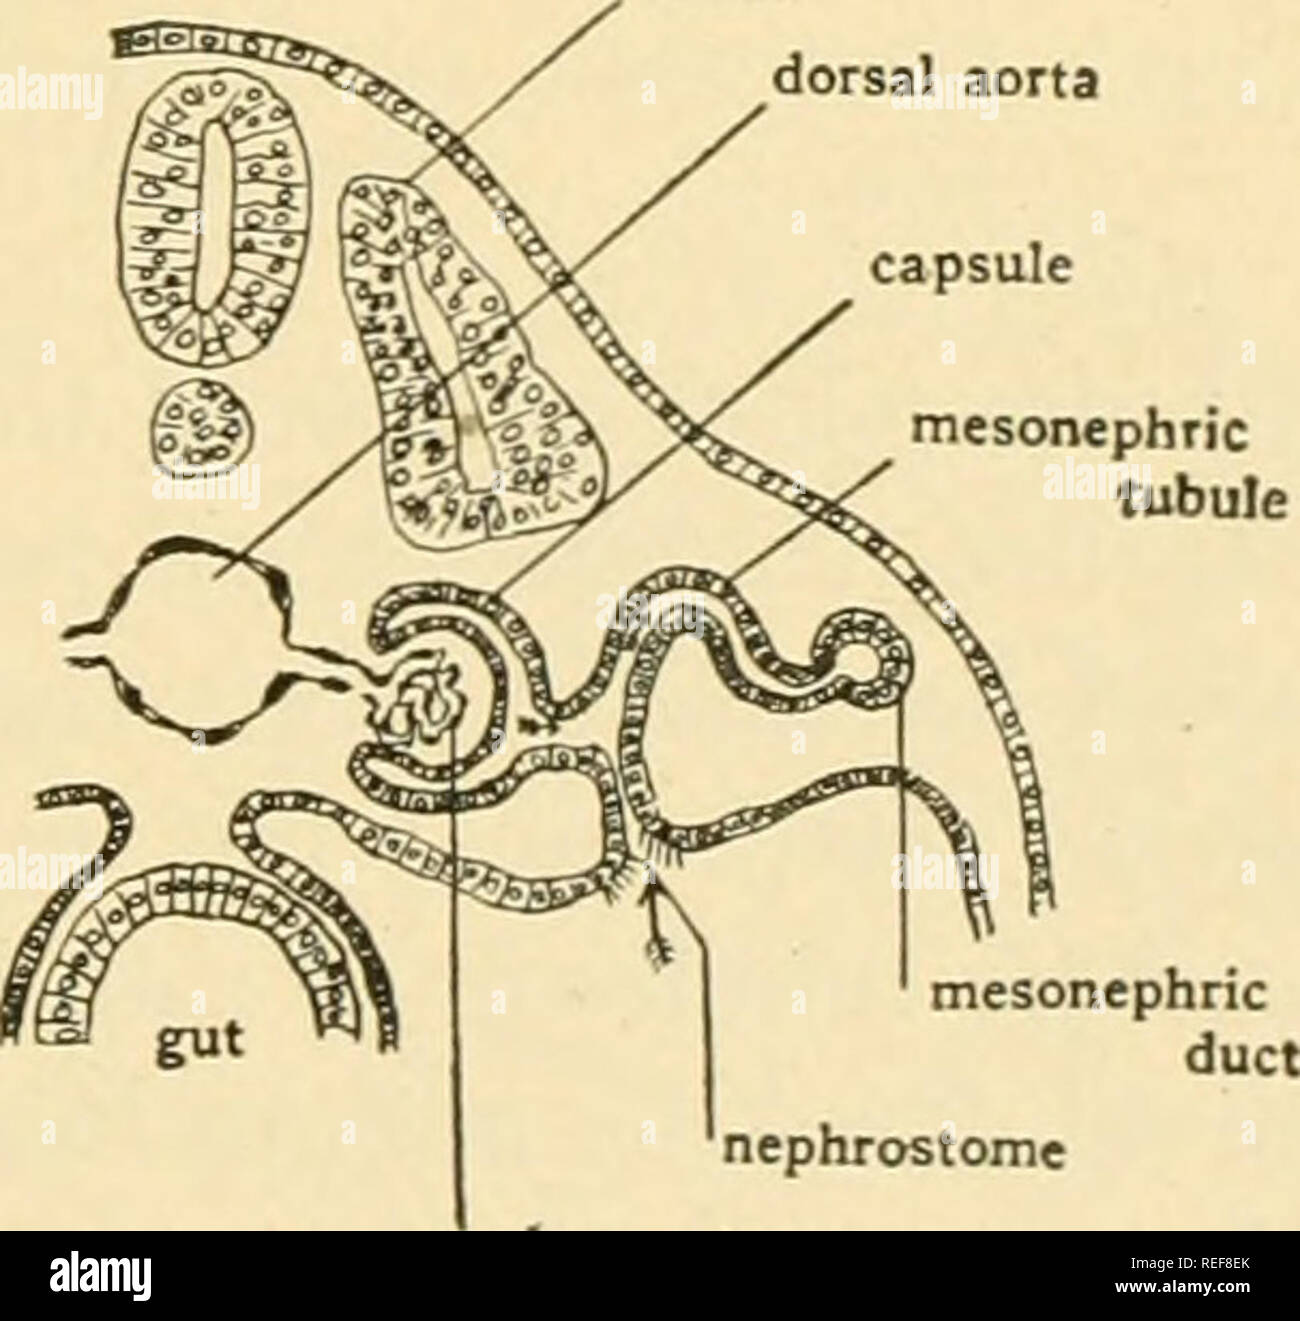 Comparative Anatomy Anatomy Comparative Somite Dorsal Aorta D